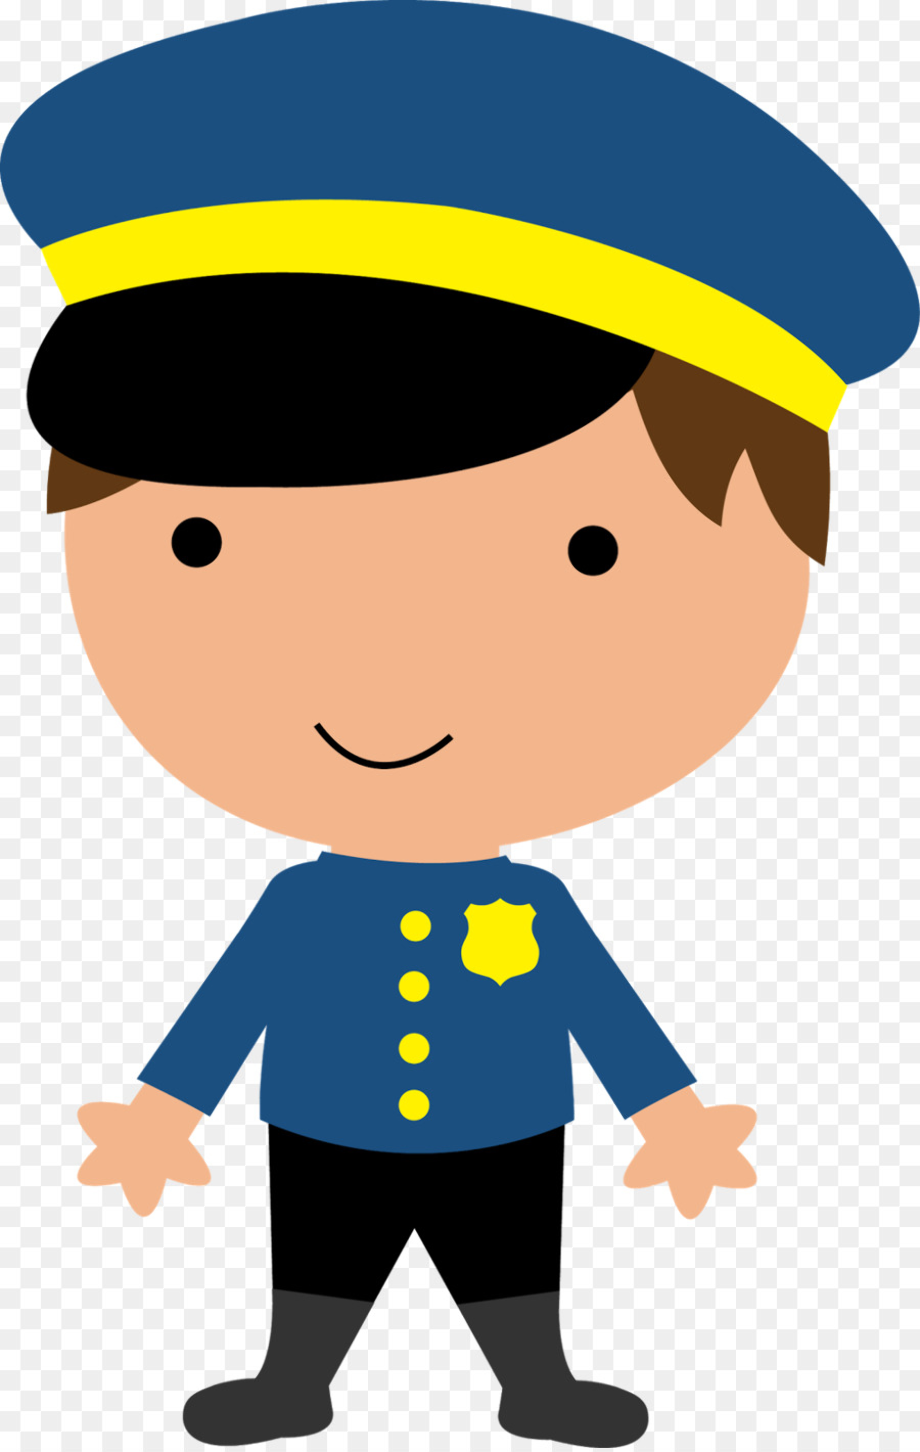 Police officer boy